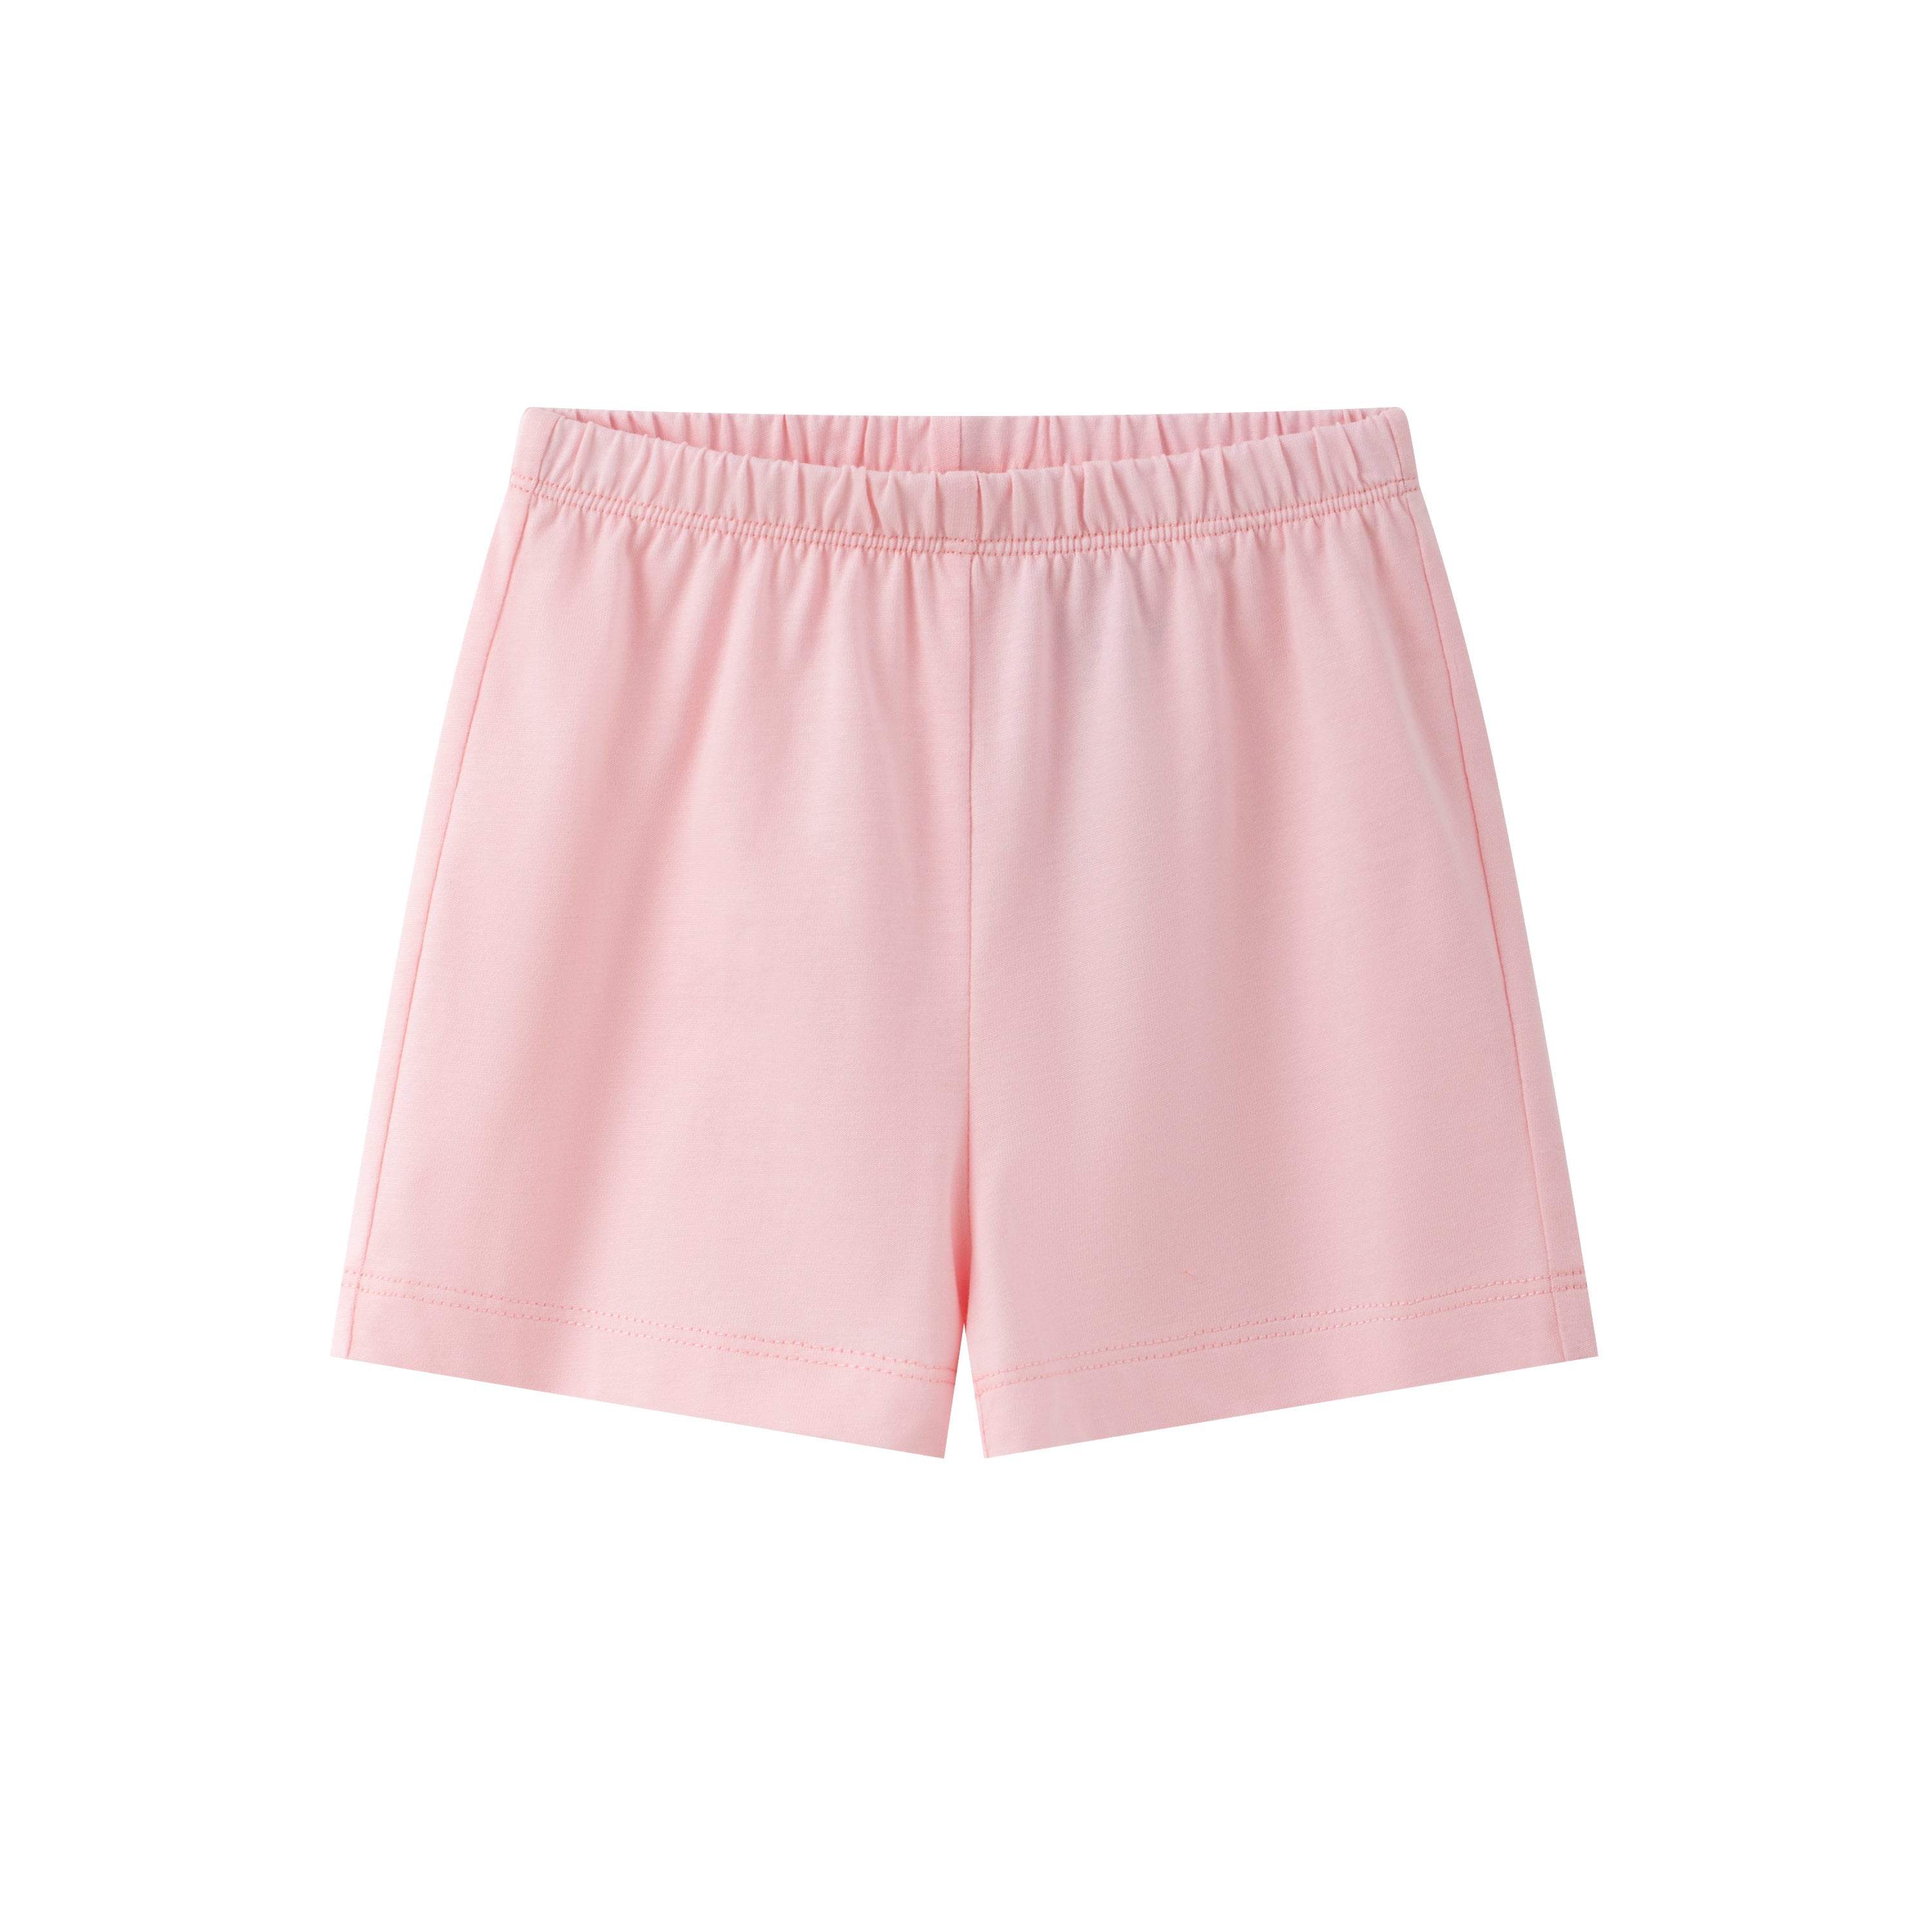 Vauva x Moomin - Baby Girls Short Sleeves Tee Set (Pink)  - Product Image 1